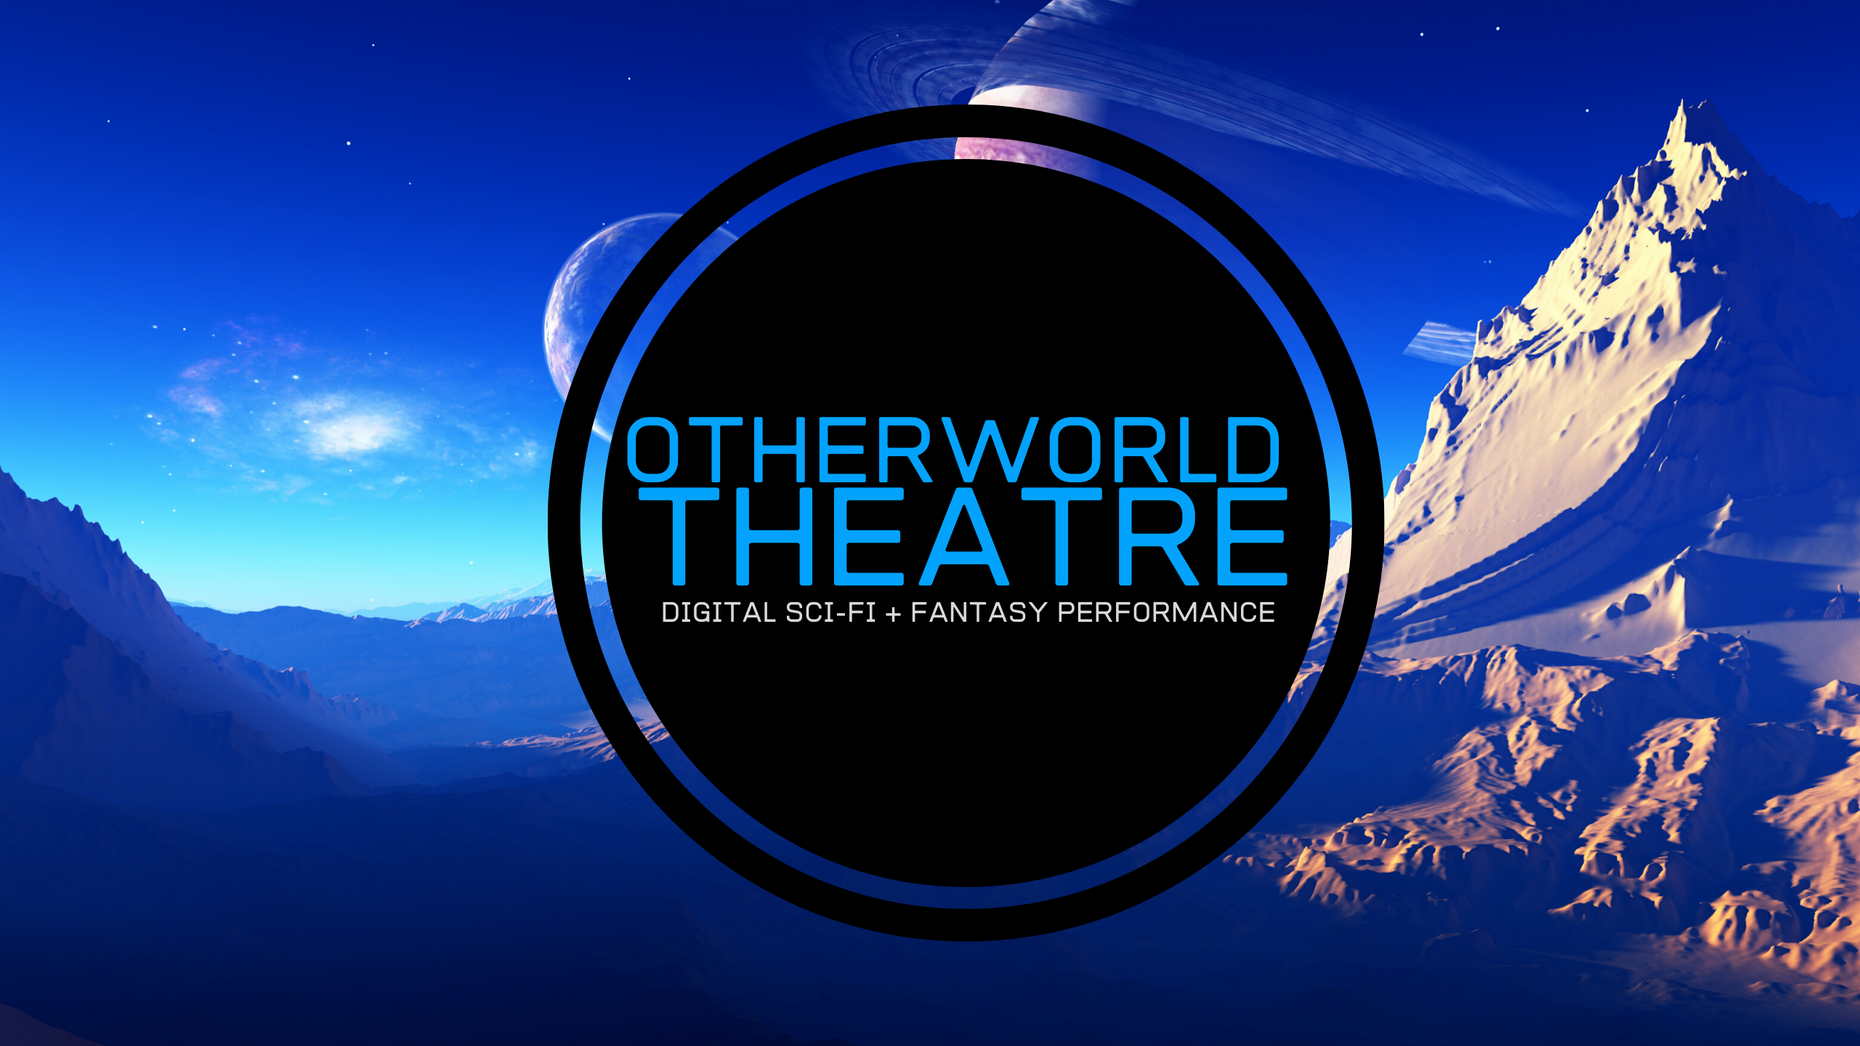 Otherworld Theatre: Digital